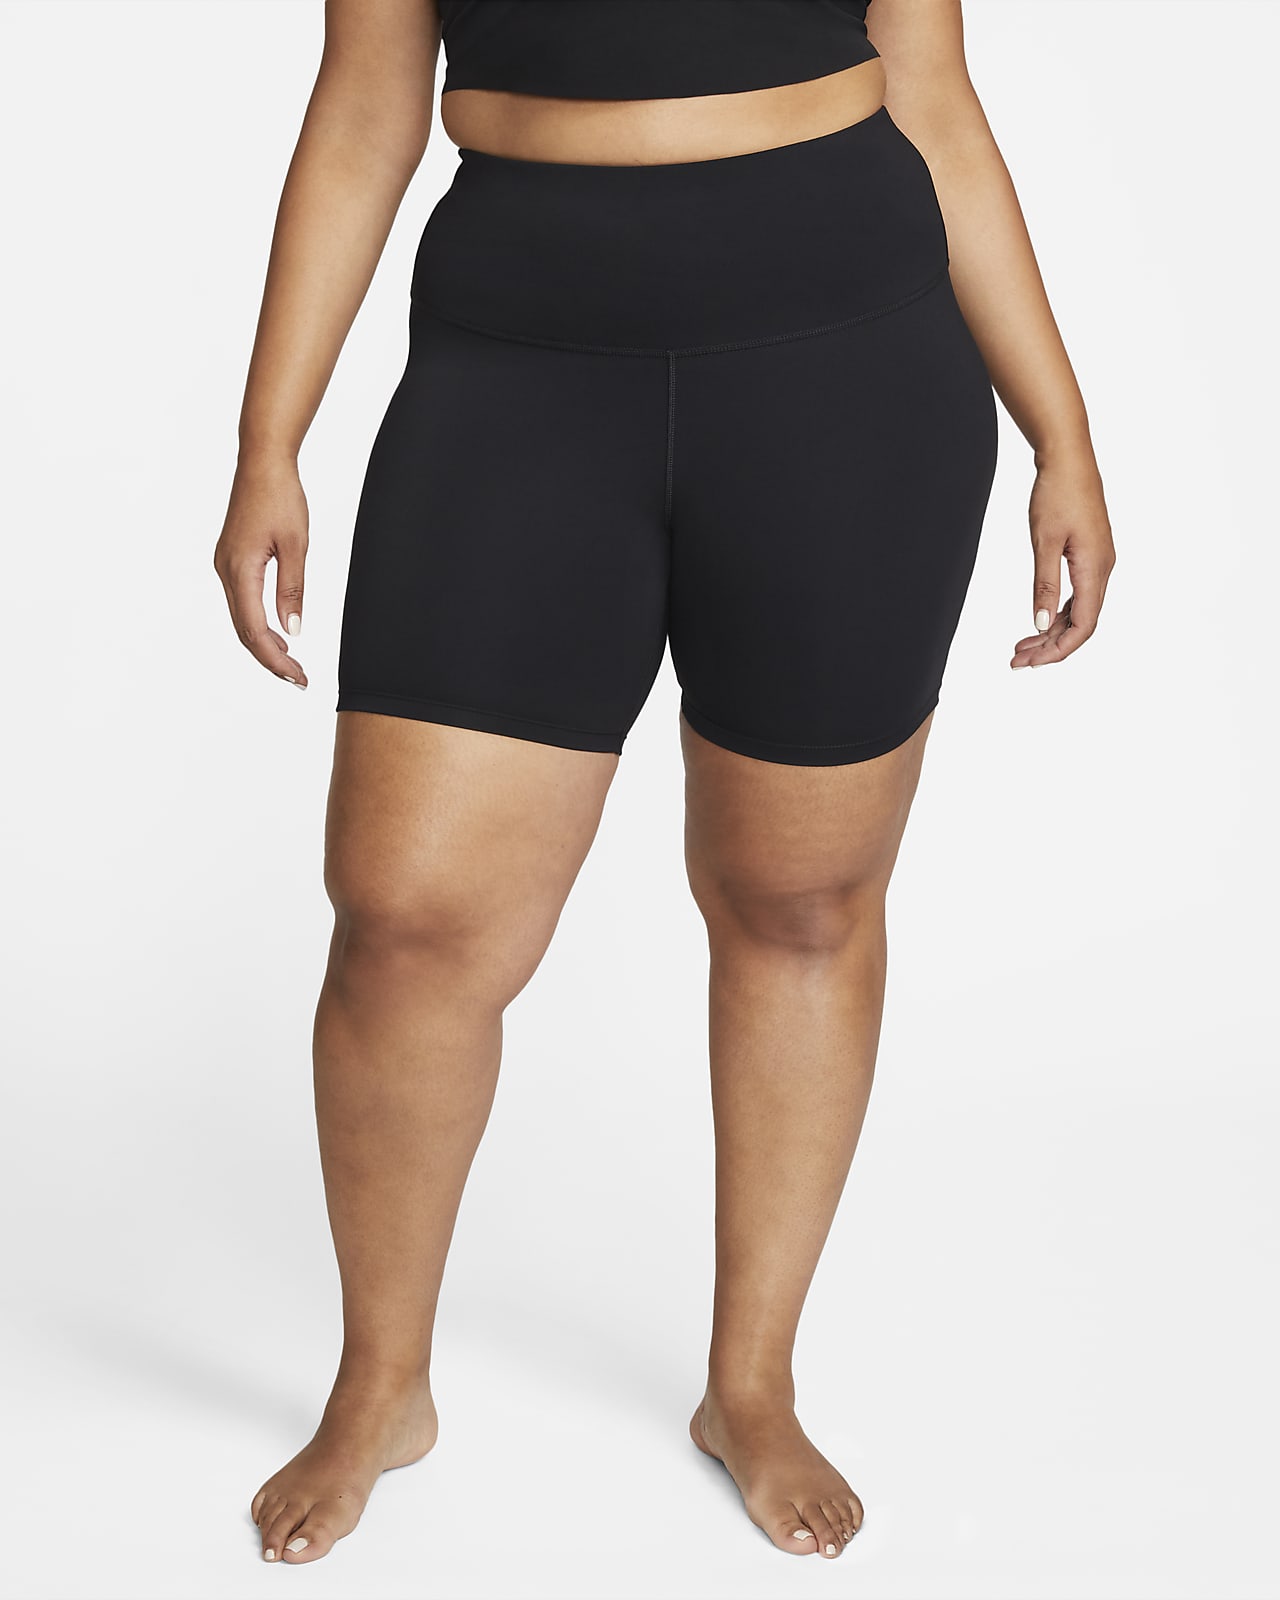 Shorts 18 cm a vita alta Nike Yoga (Plus size) – Donna